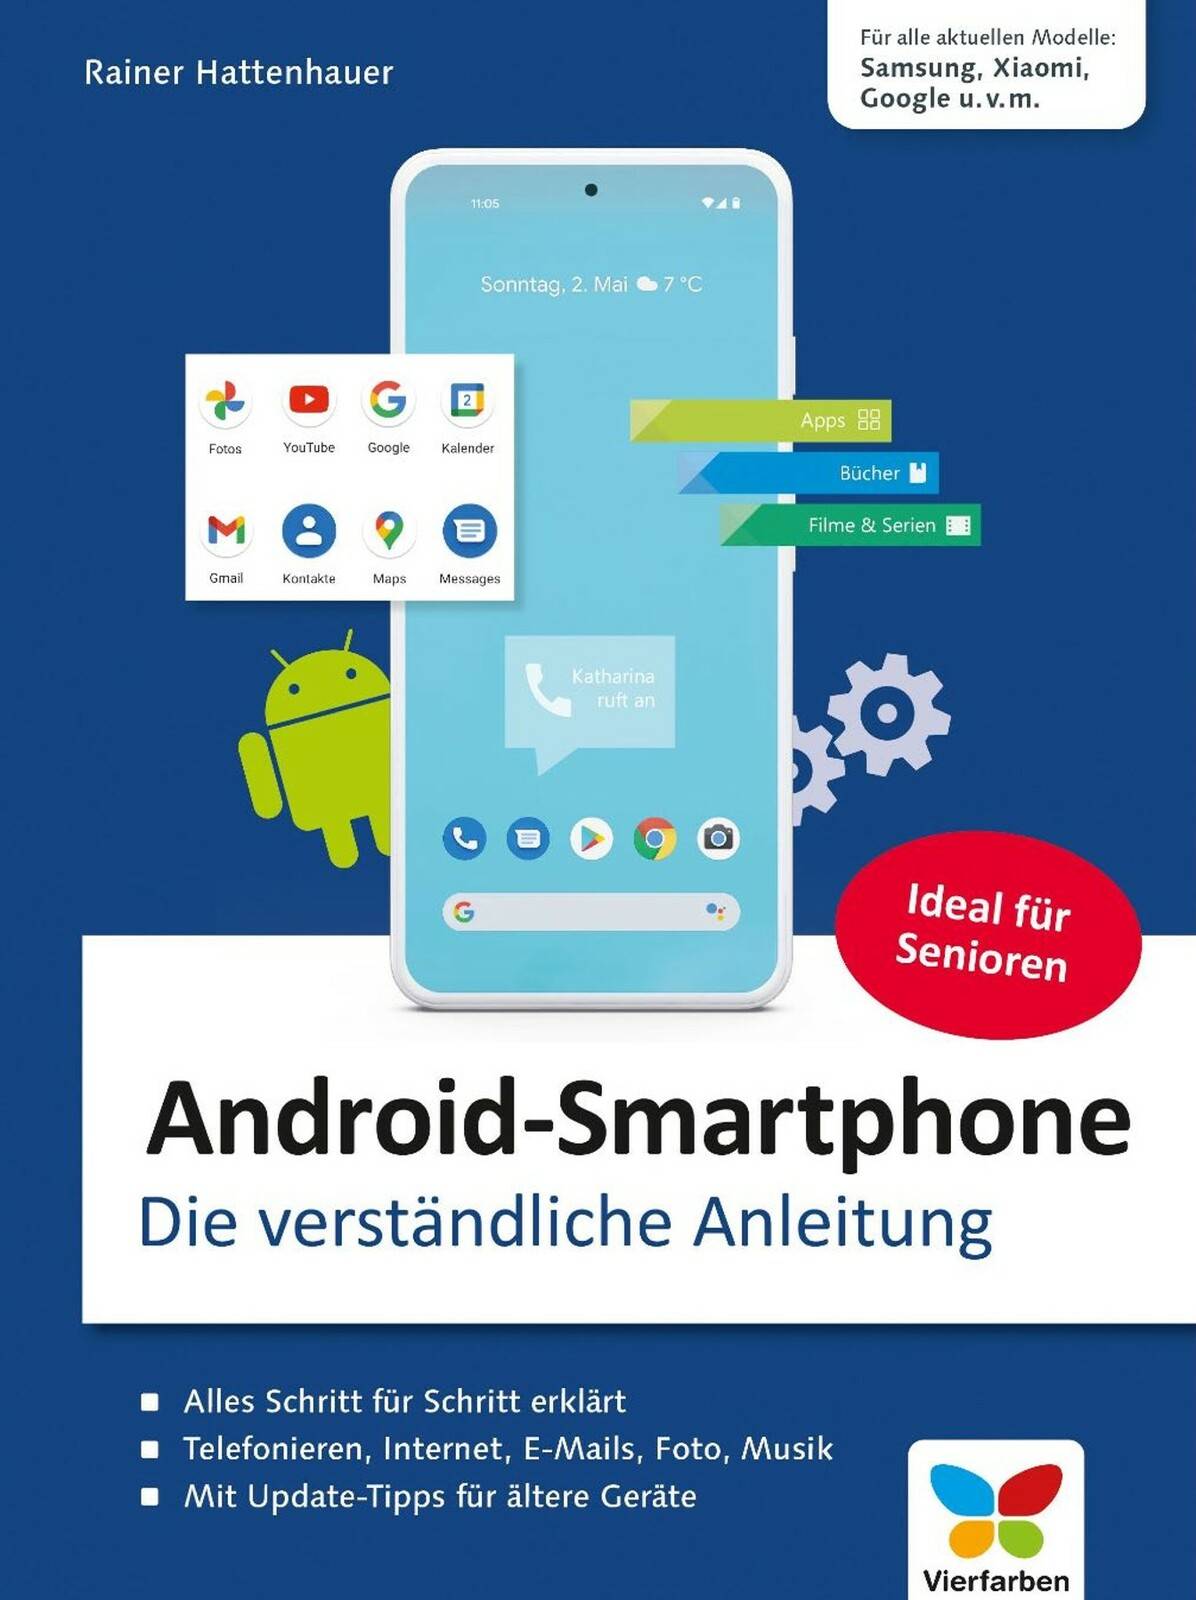 android-smartphone_diqke3t.jpg